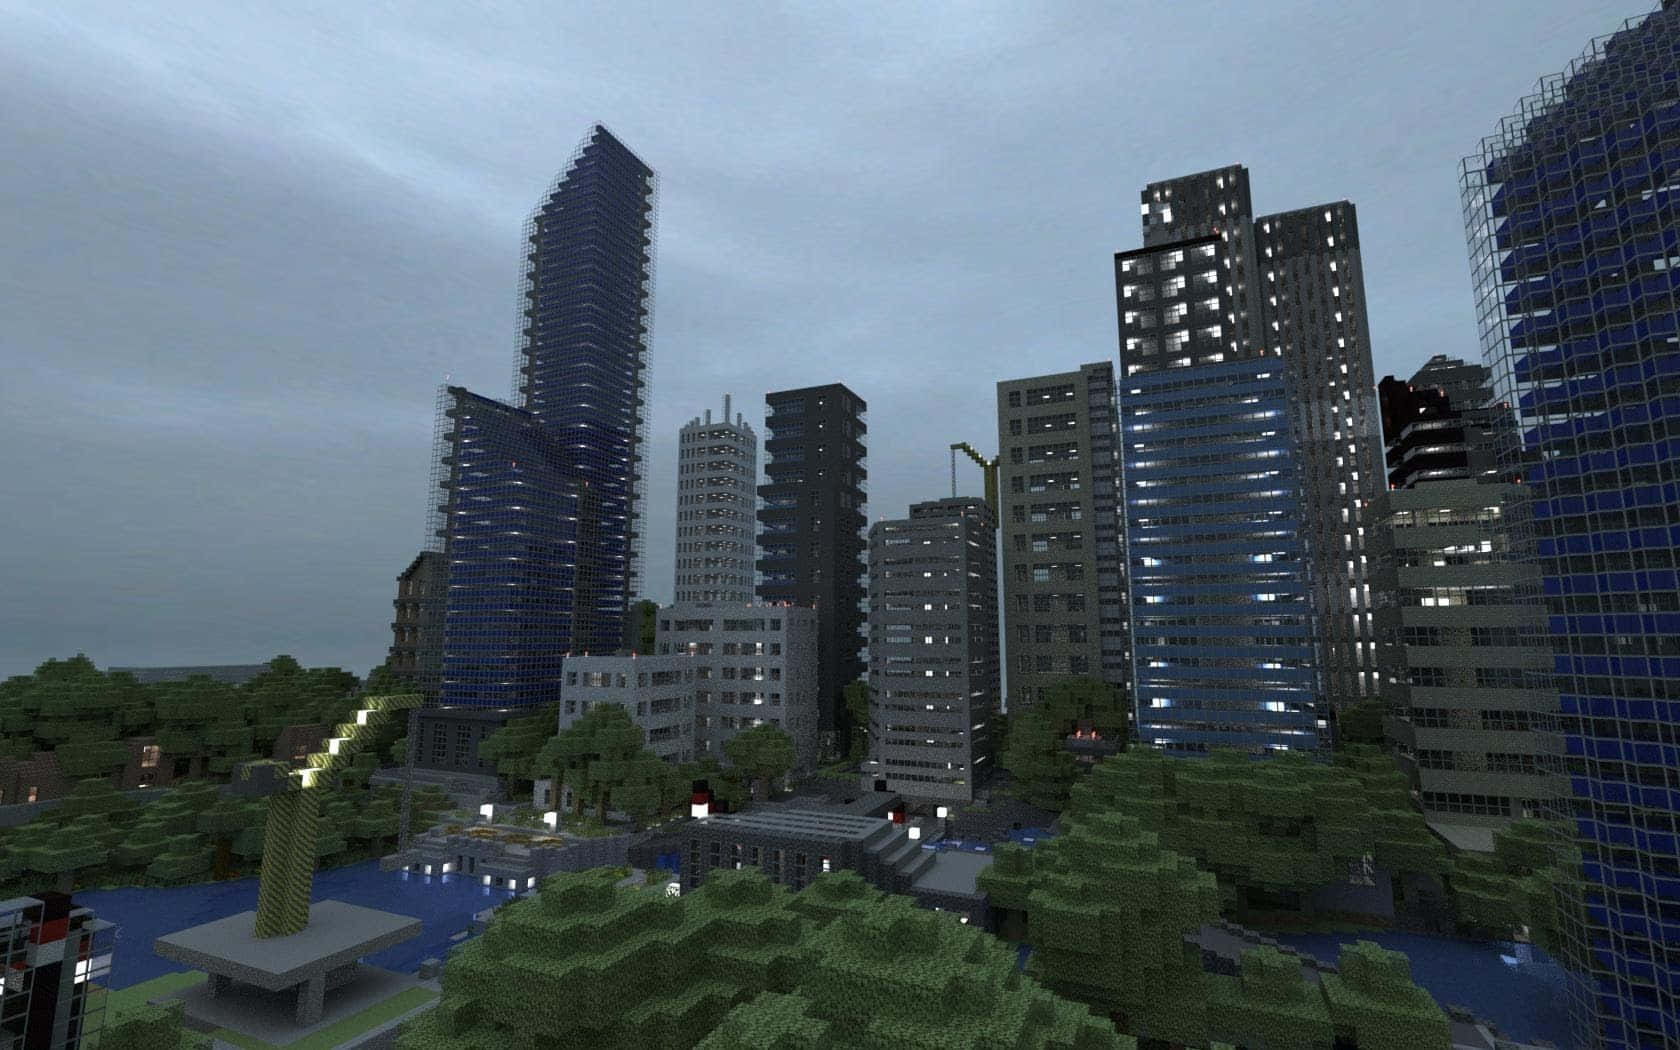 Stunning Minecraft Cityscape at Night Wallpaper